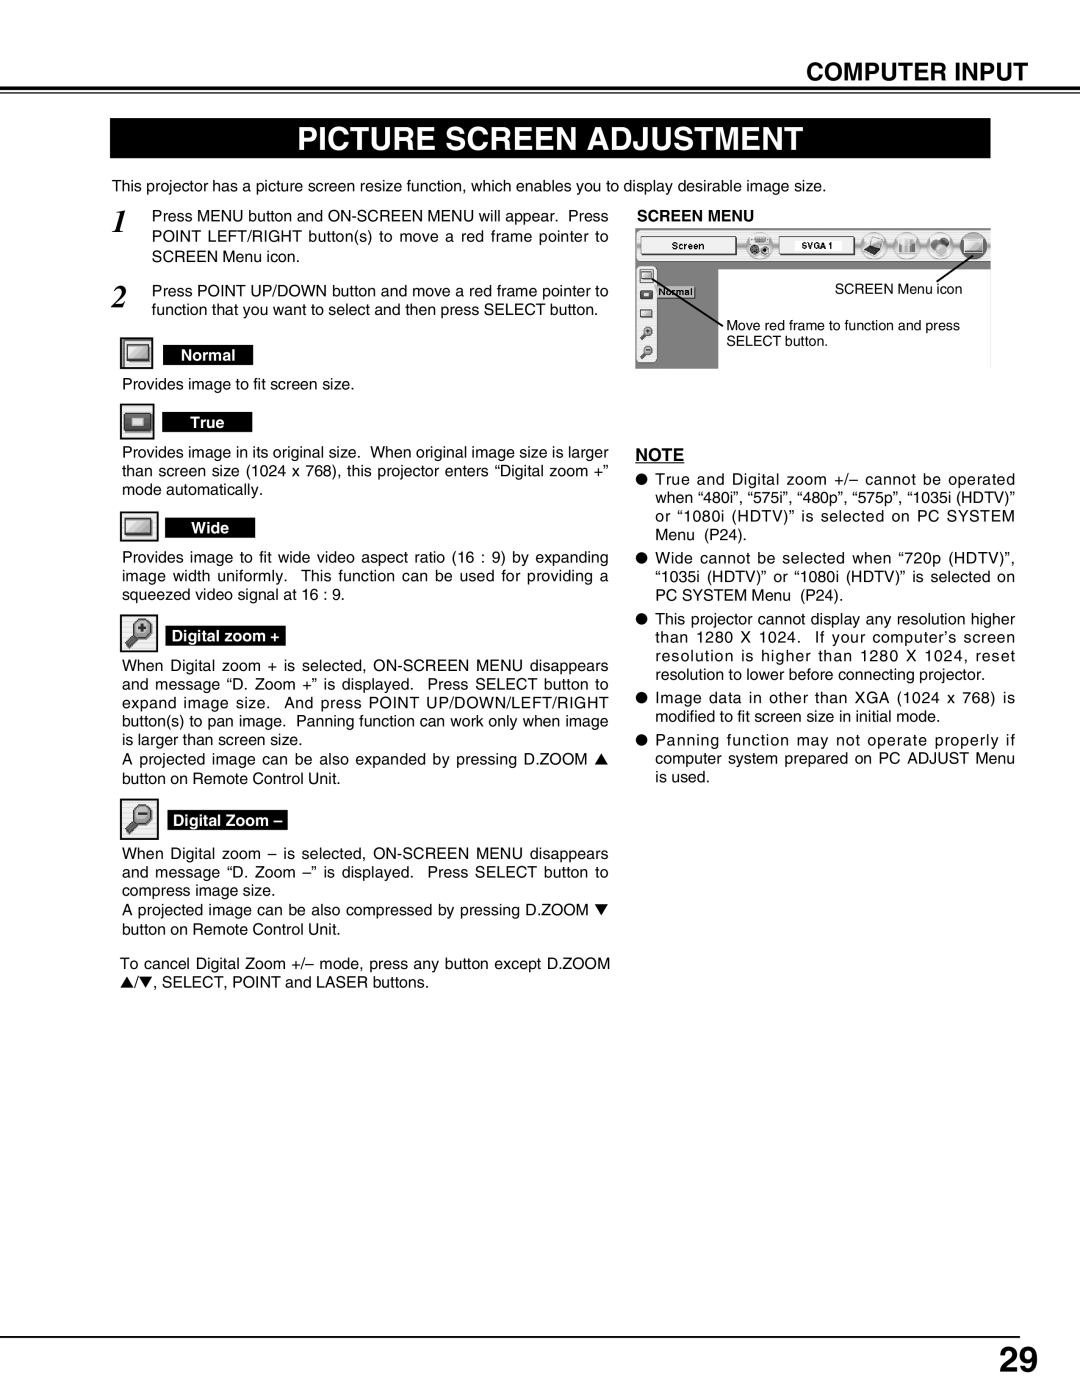 Eiki LC-X70 instruction manual Picture Screen Adjustment, Computer Input, Screen Menu 